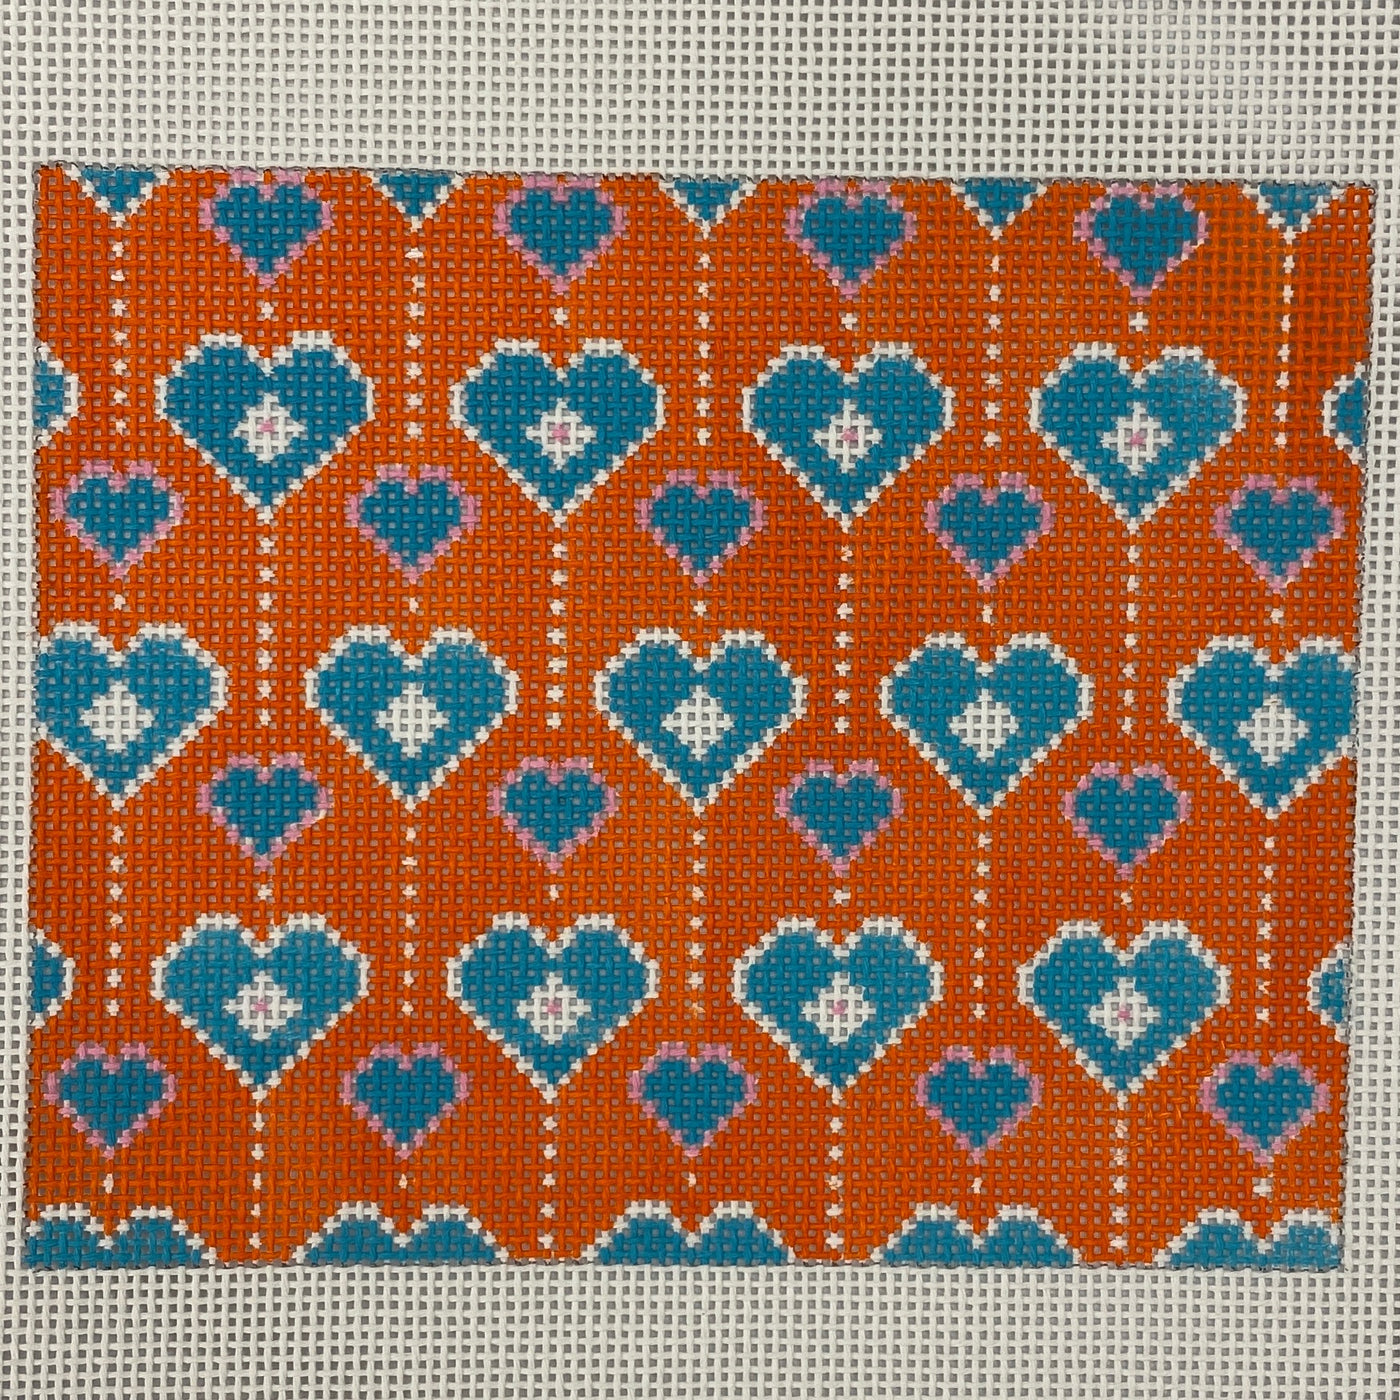 Olivia Orange Hearts Needlepoint Canvas